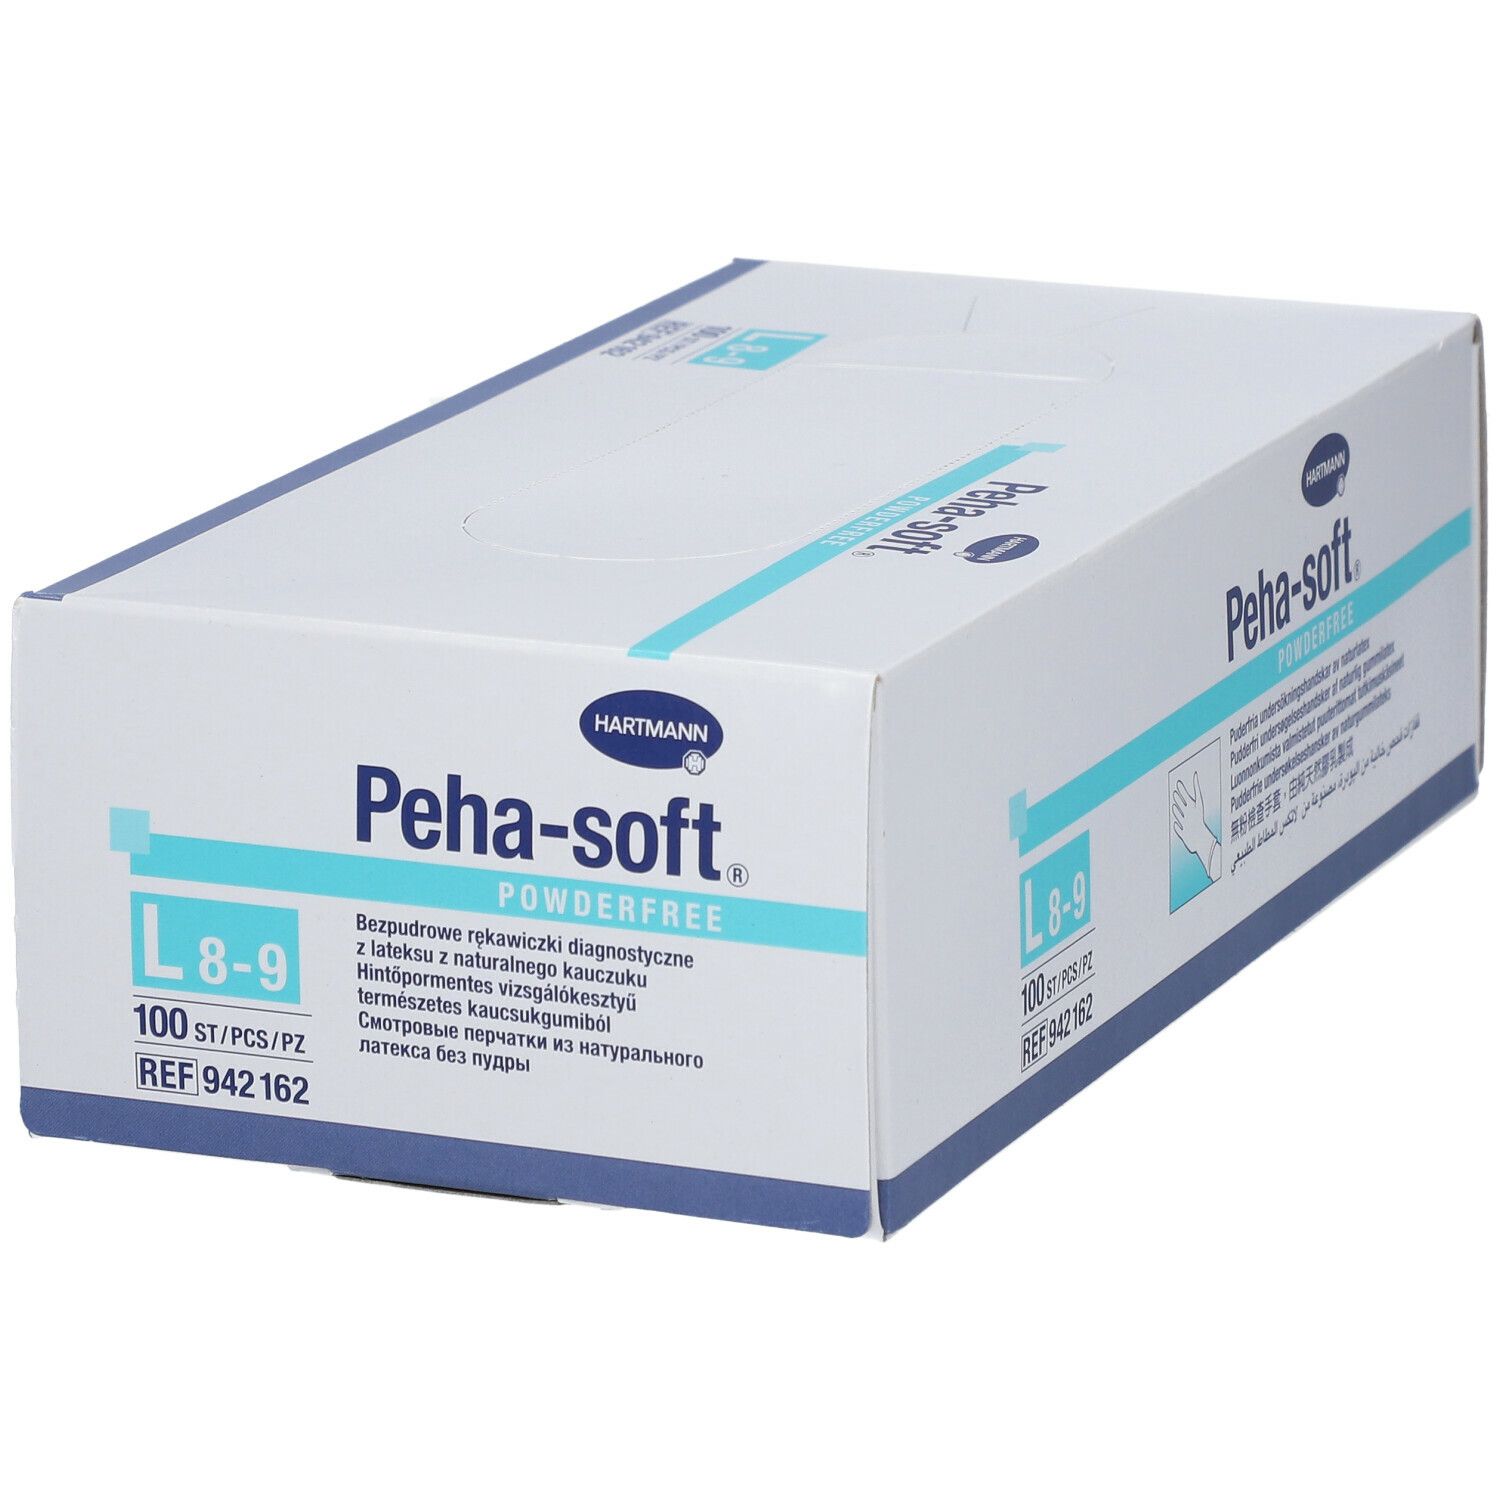 Peha-soft® powderfree en Latex Gants d'examen Gr. L 8 - 9